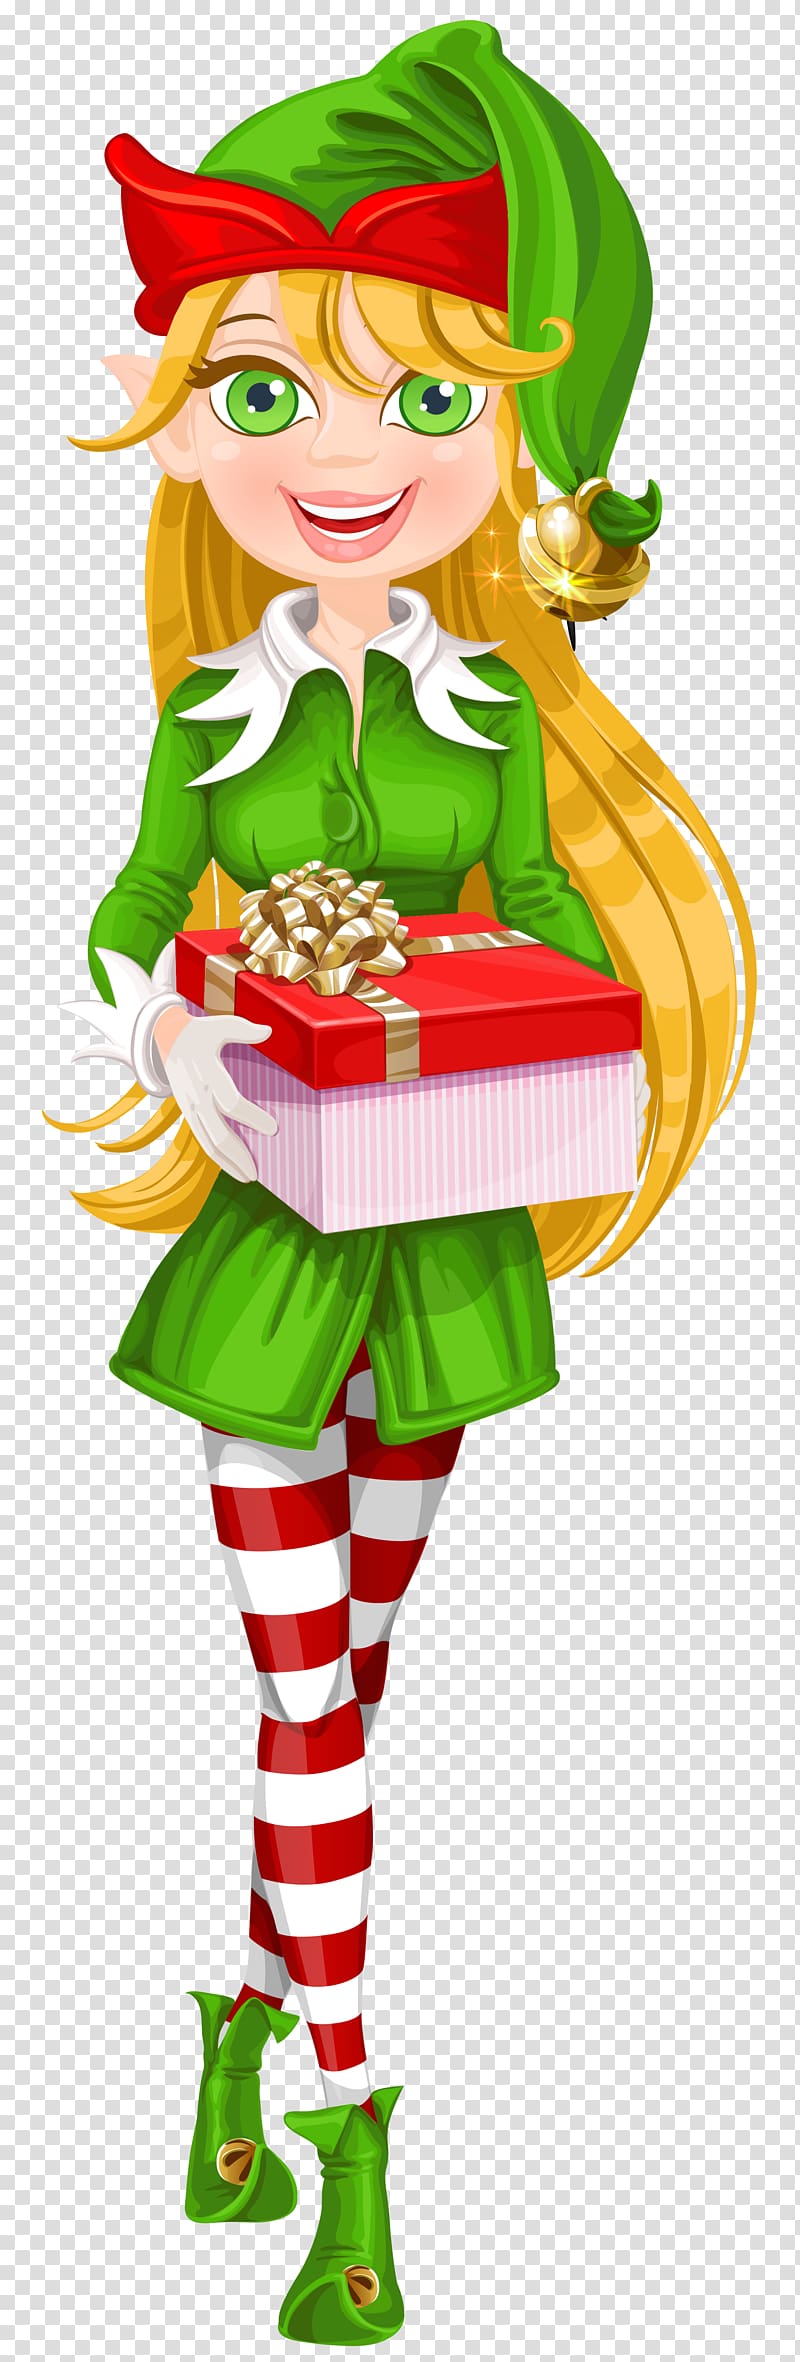 Female Dwarf Holding Gift The Elf On The Shelf Santa Claus Christmas ...